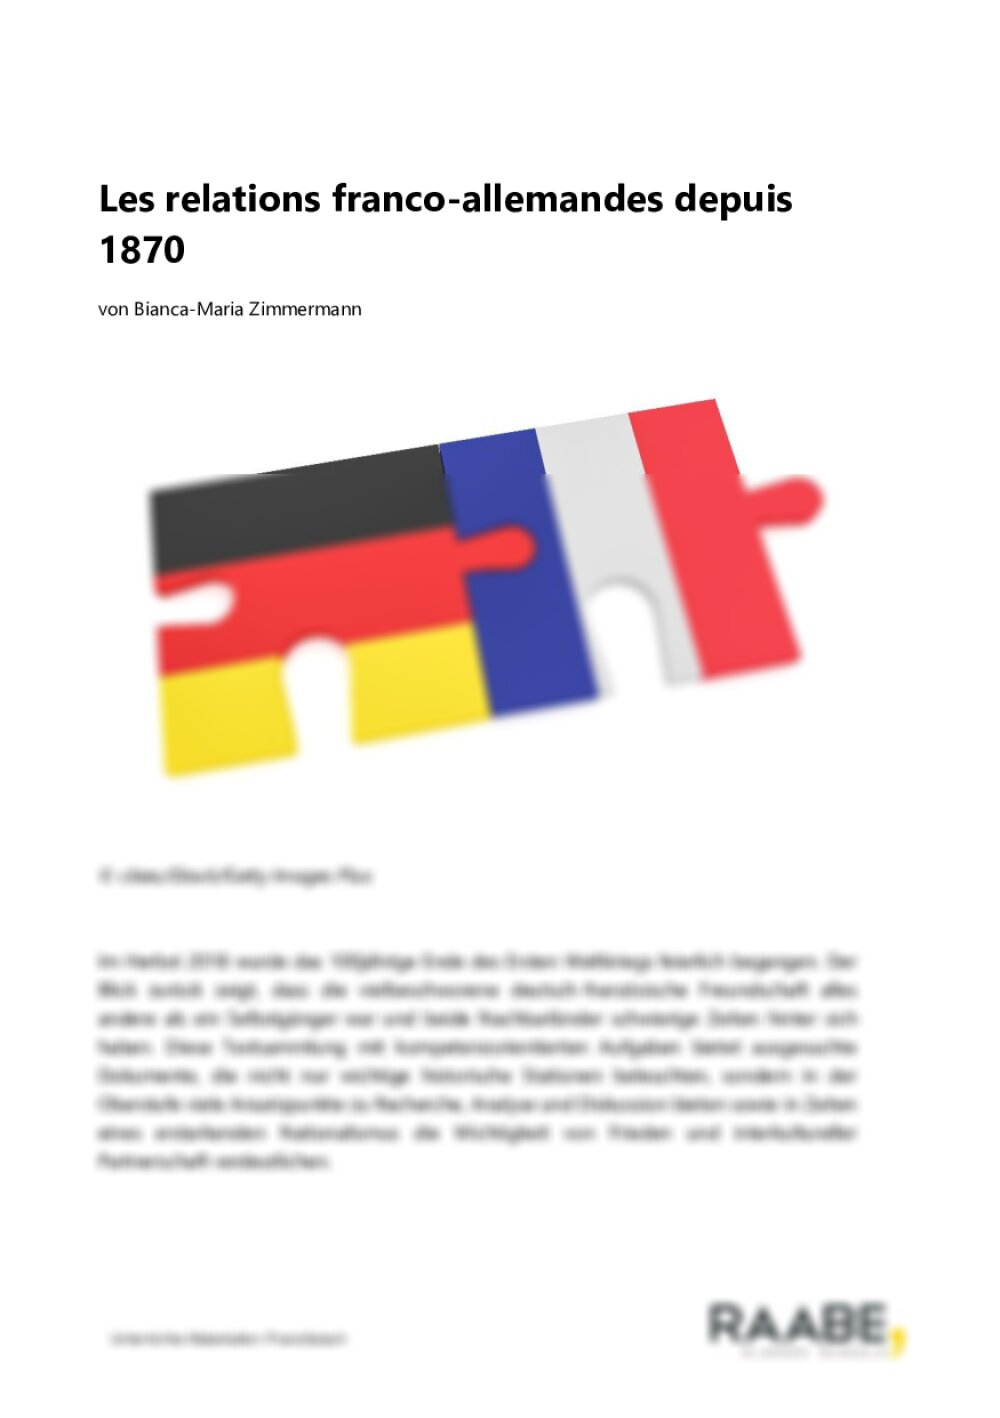 Les relations franco-allemandes - Seite 1